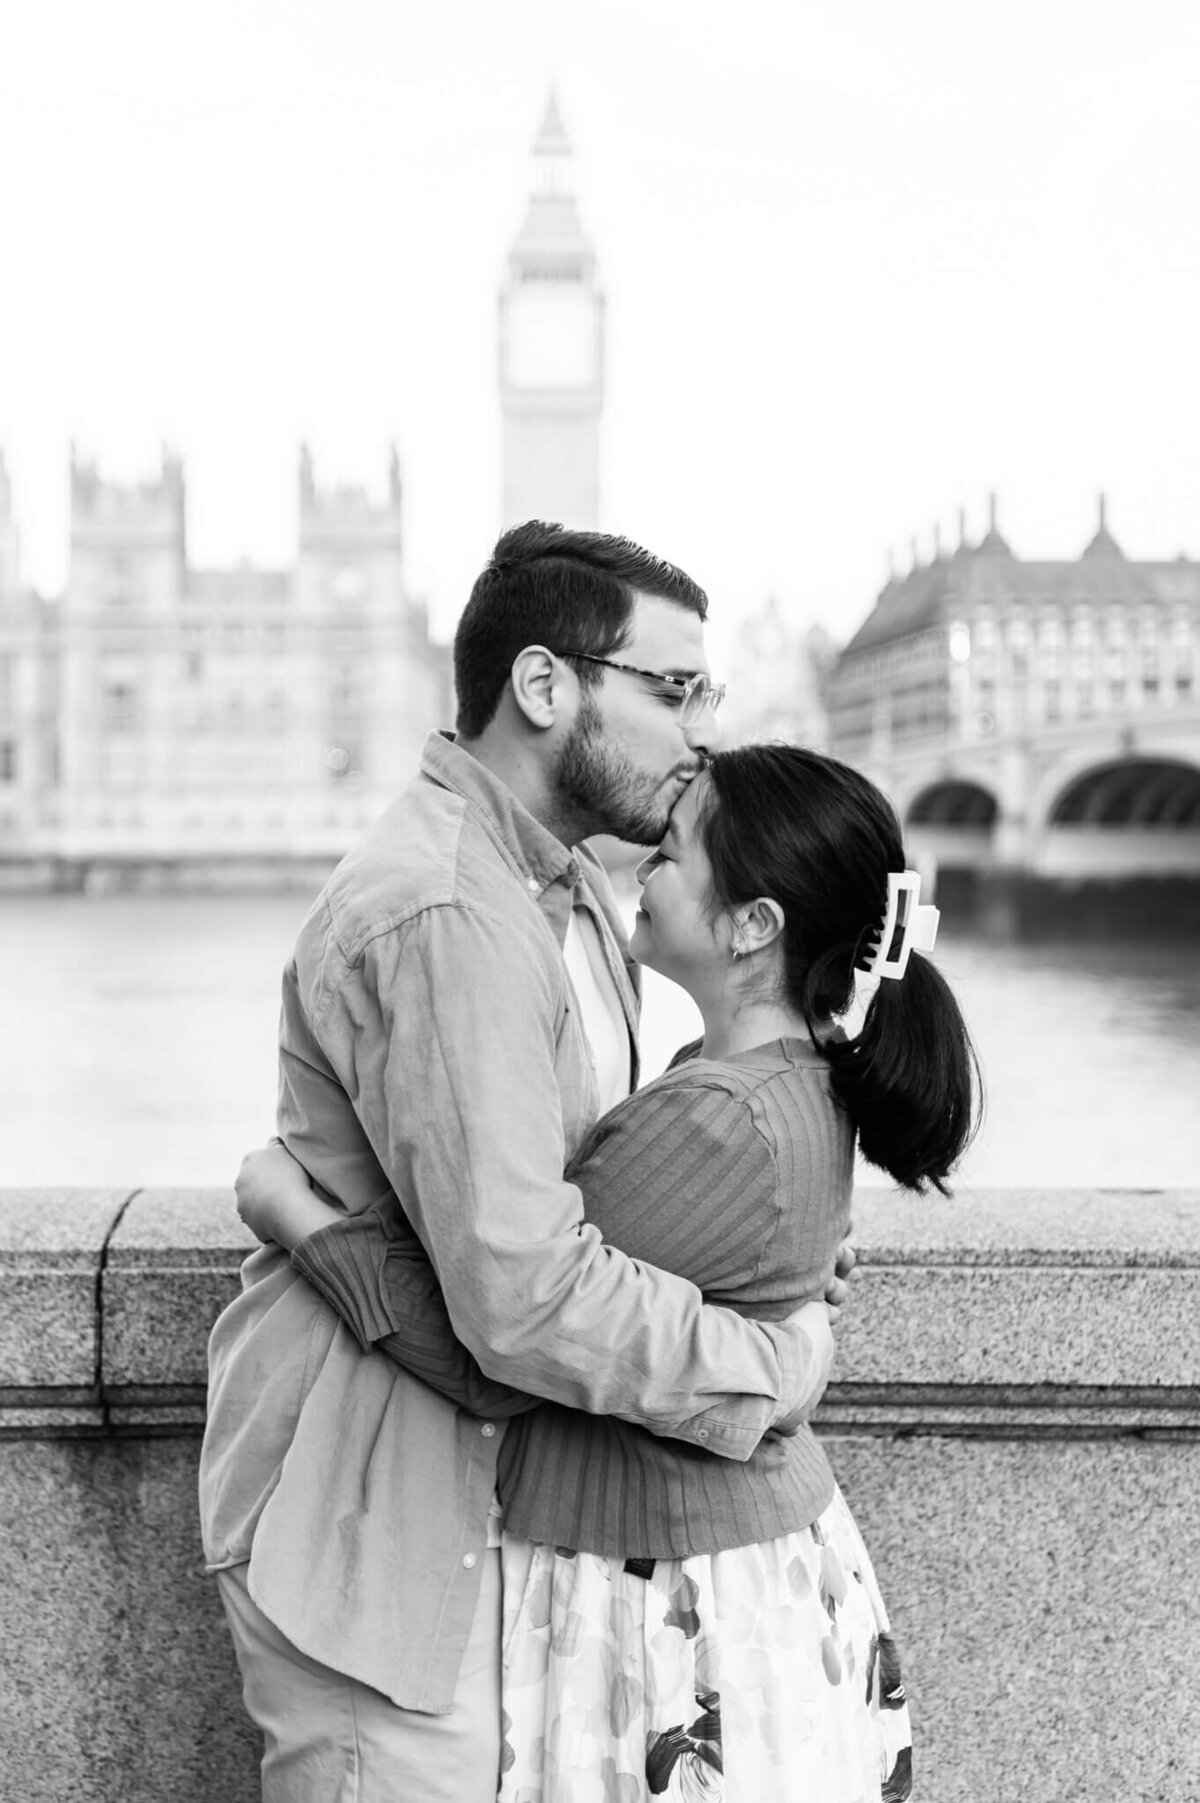 London Engagement Proposal & Wedding Photographer - Chloe Bolam - K&J - 16.09.23 -14